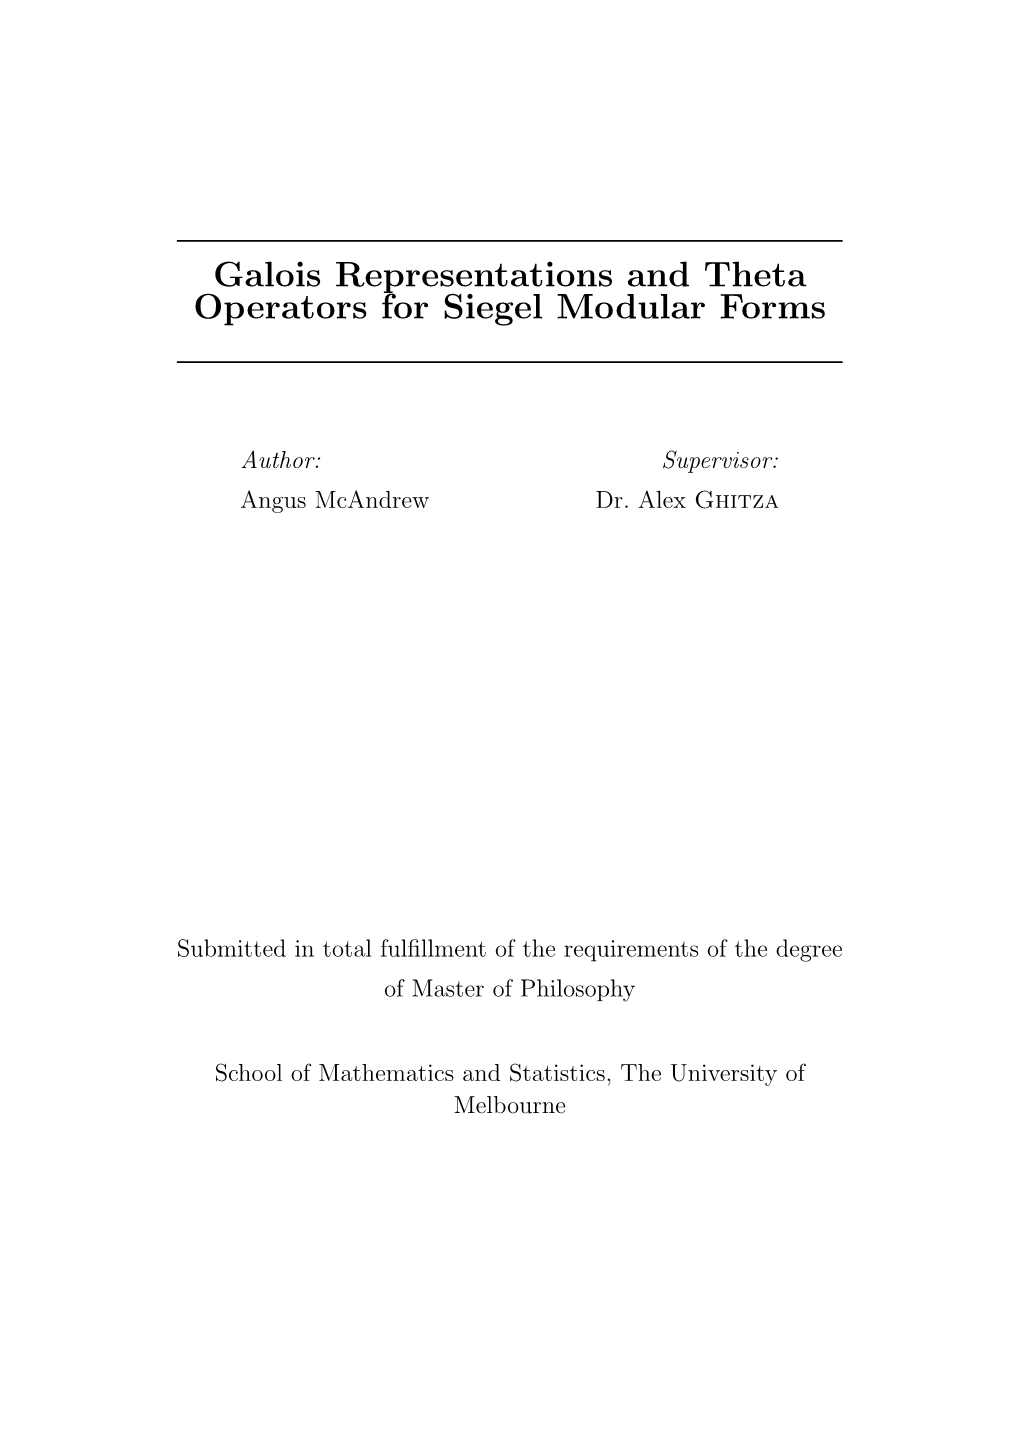 Galois Representations and Theta Operators for Siegel Modular Forms